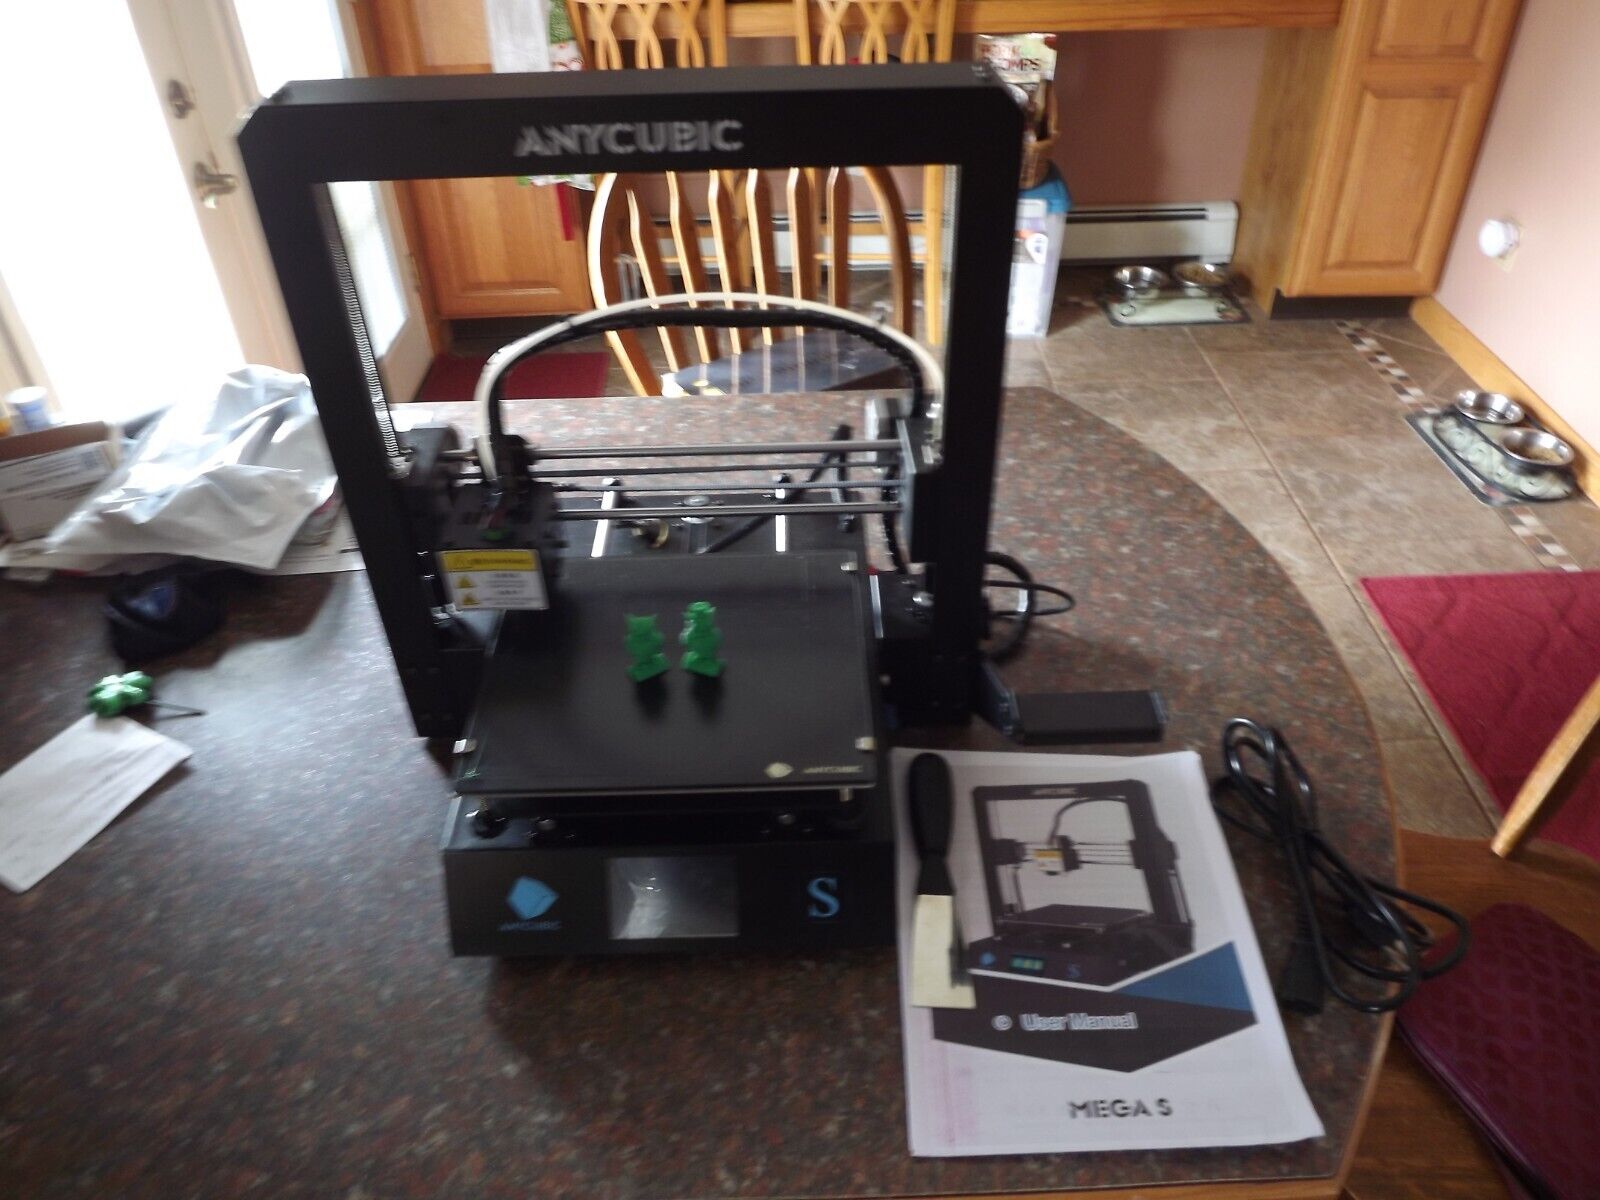 Anycubic Mega S Mega-S 3D Printer Print Size 210mm*210mm*205mm